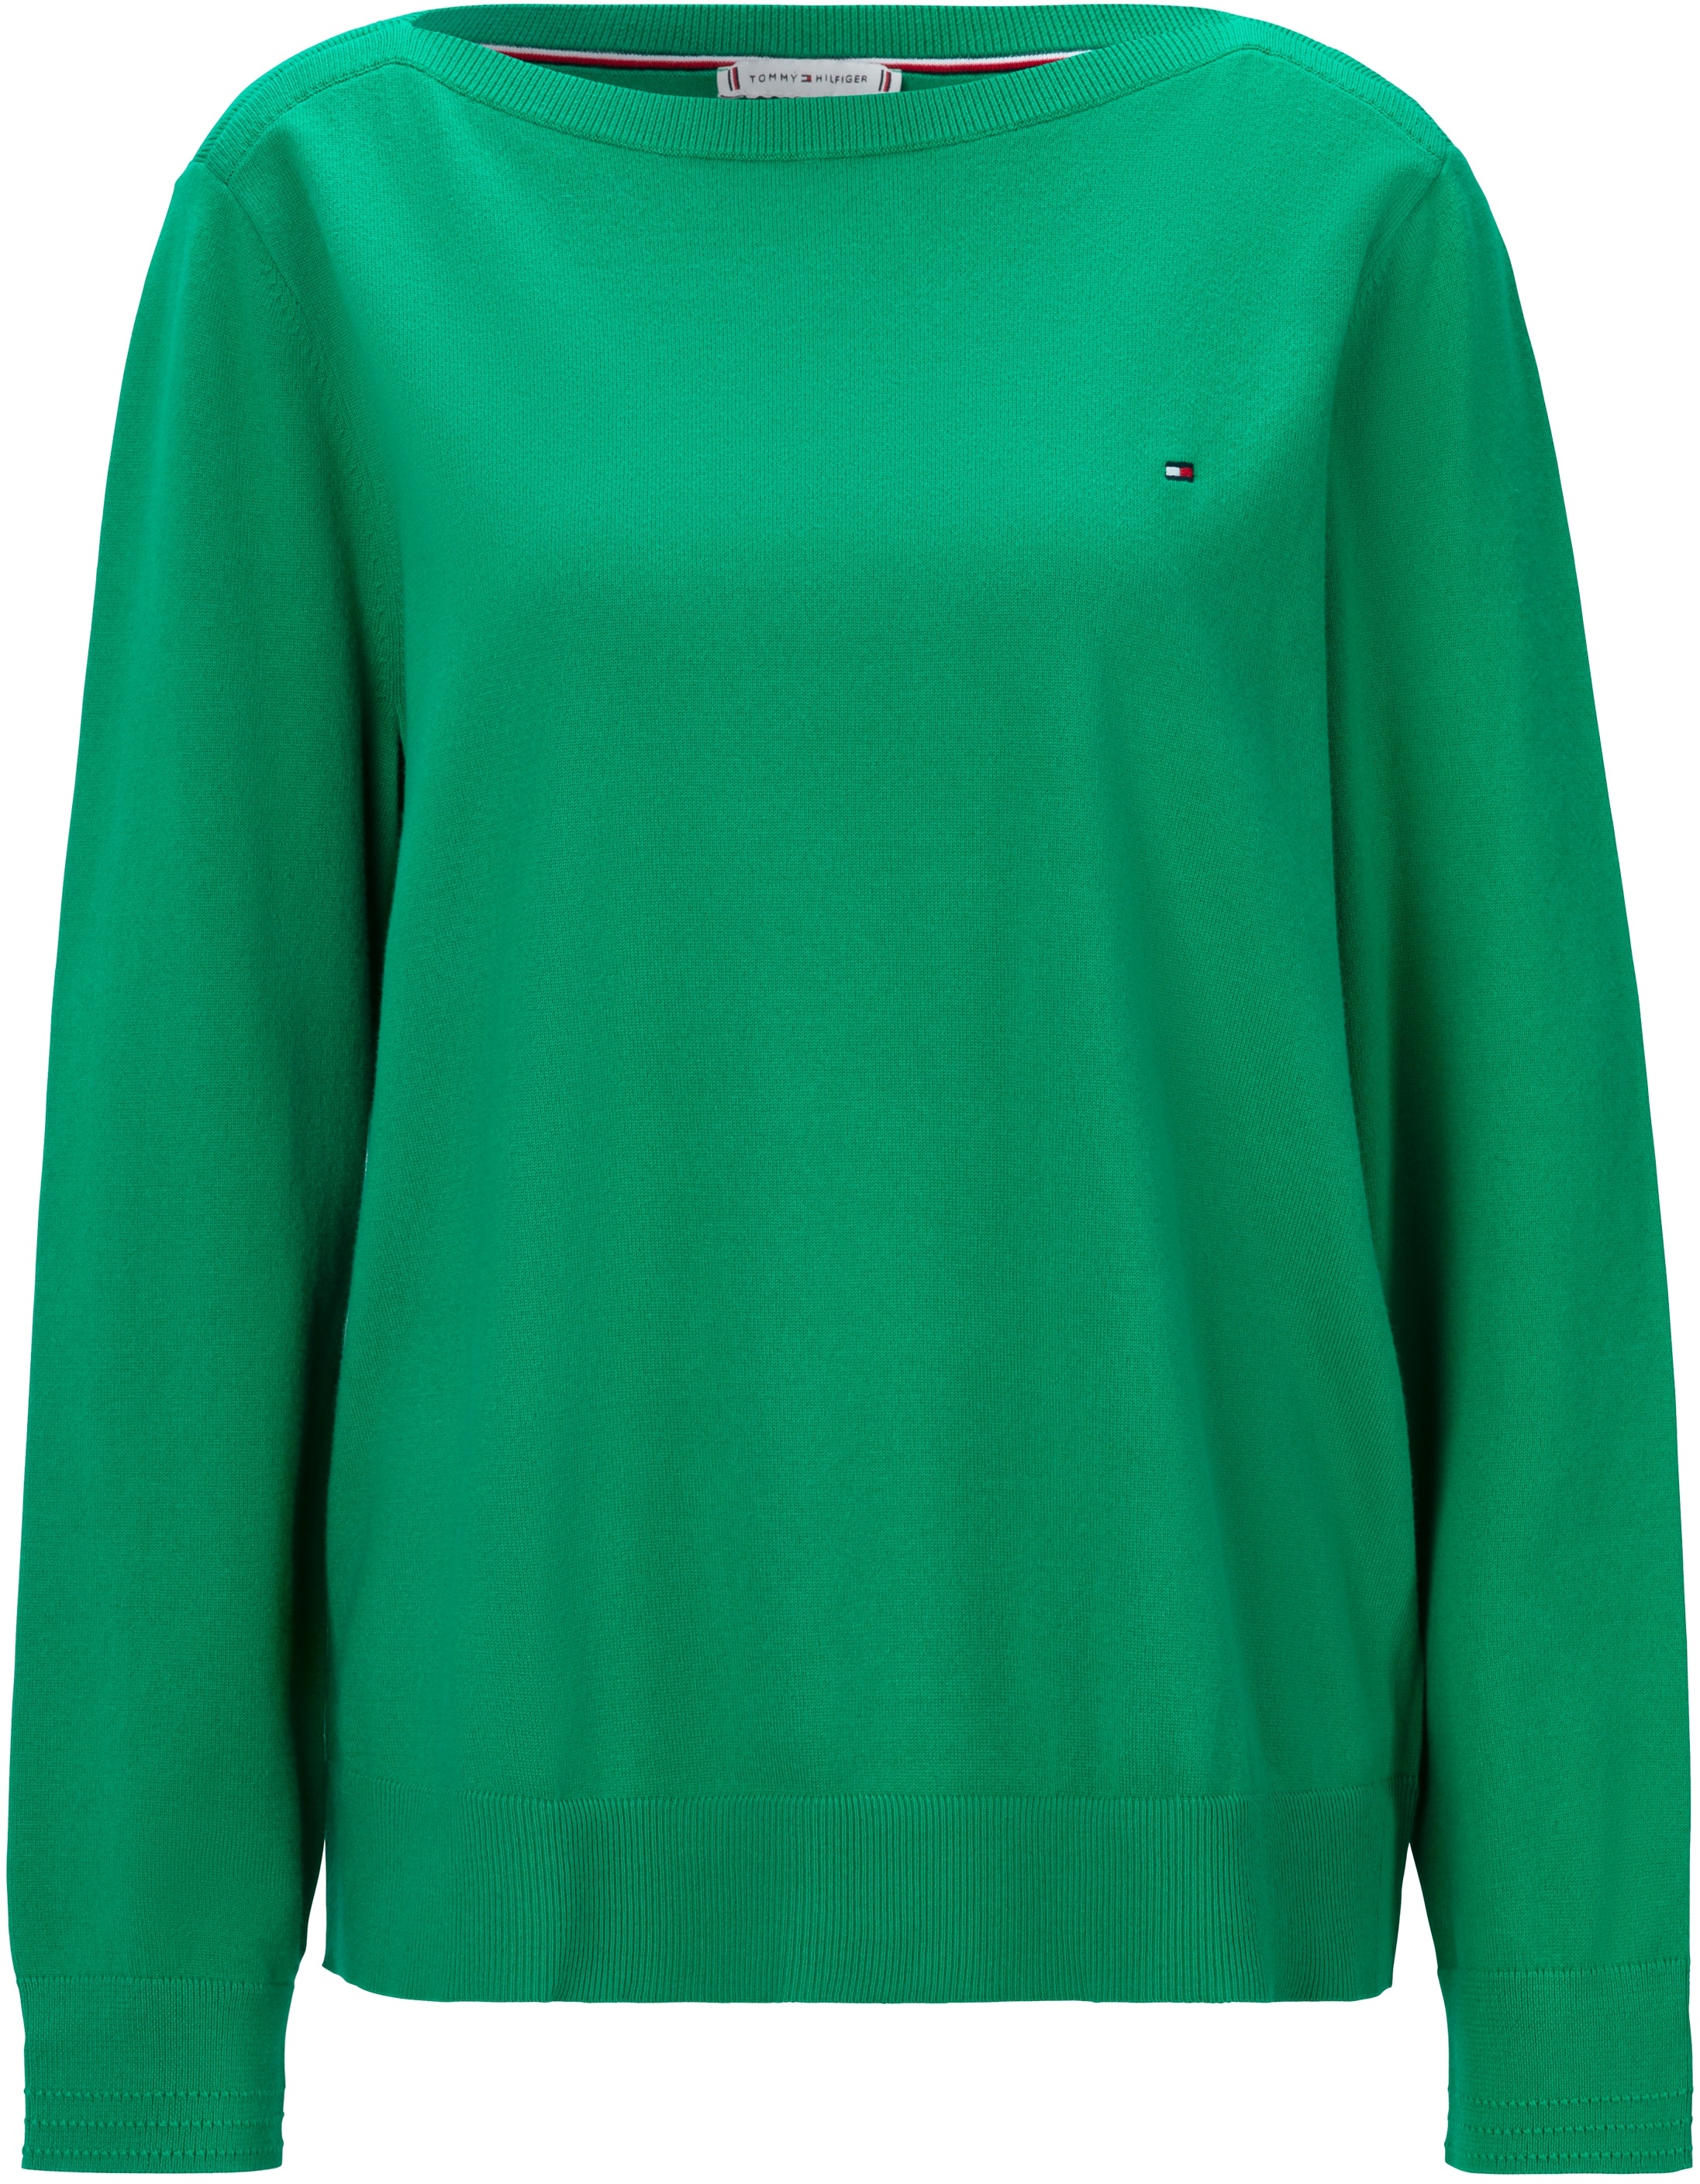 Strickpullover TOMMY HILFIGER CURVE Gr. 46, grün (olympic green) Damen Pullover Rundhalspullover